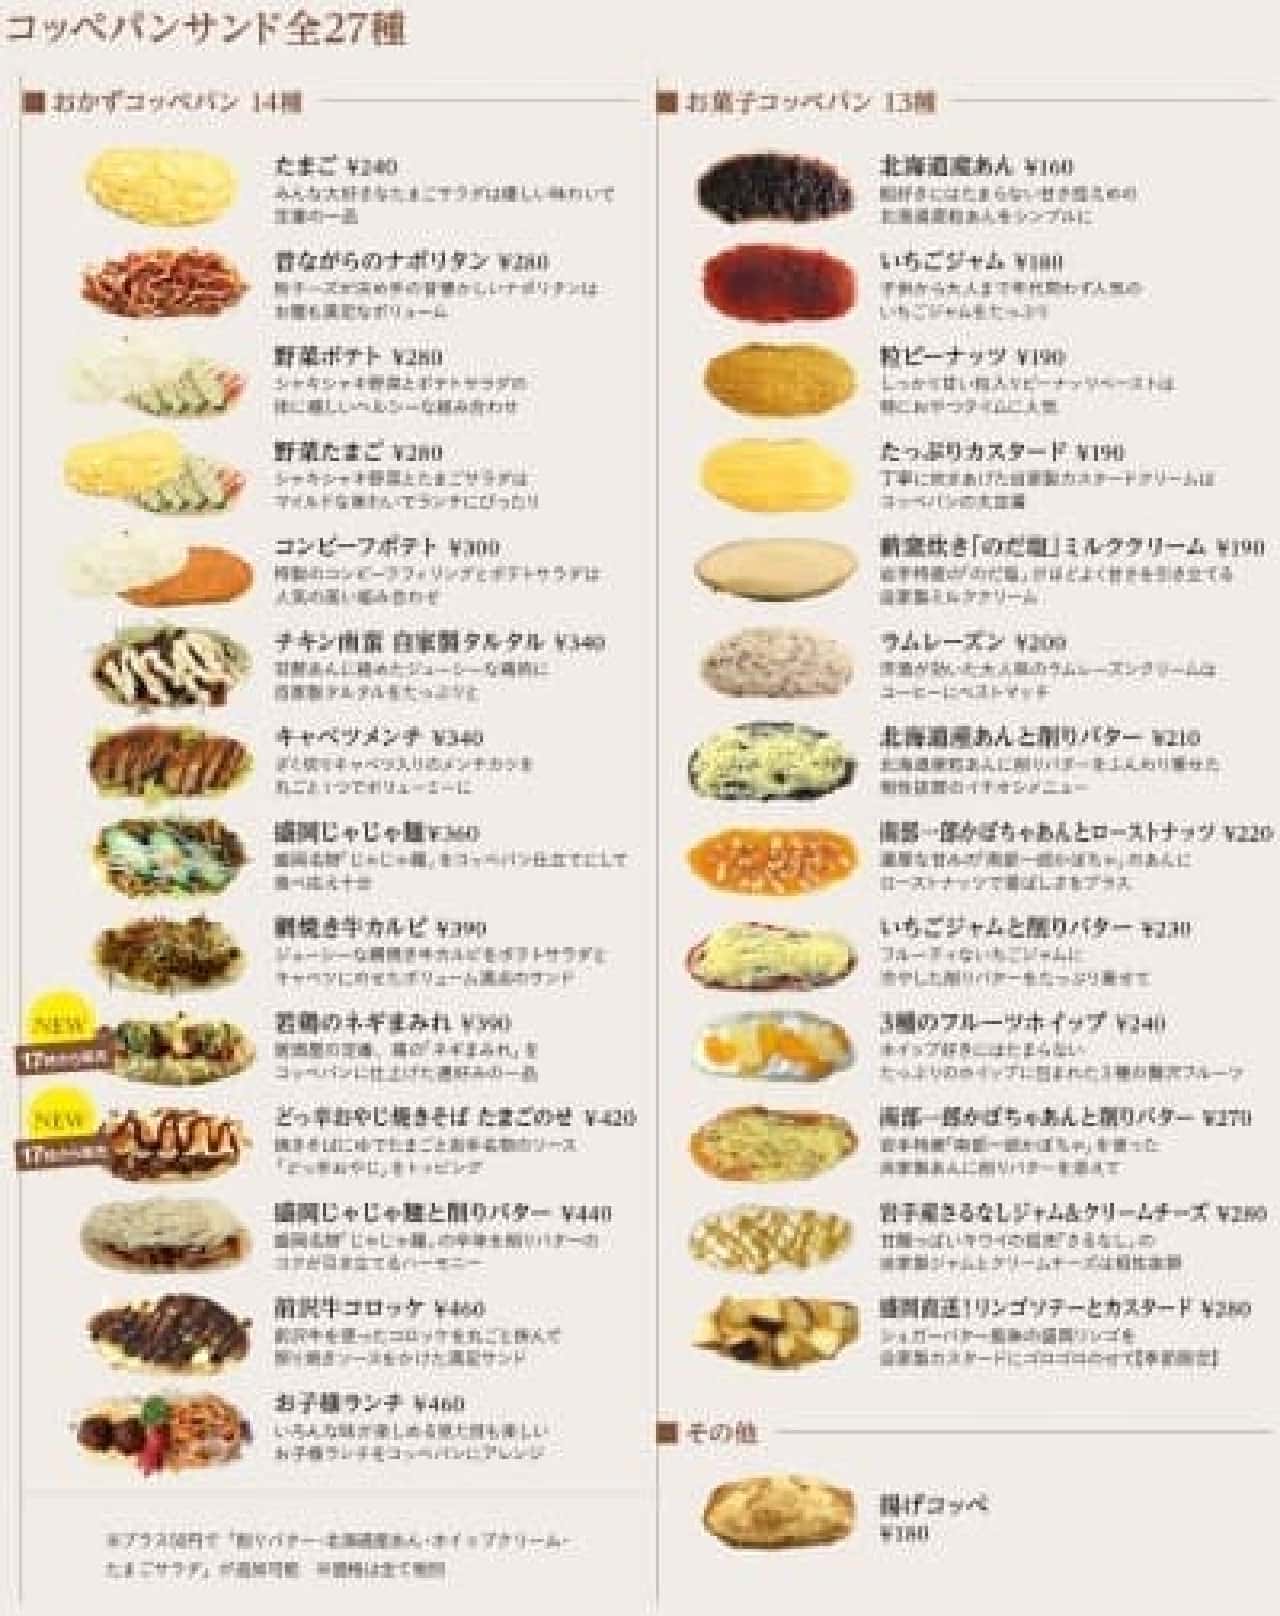 (Food) Morioka Seipan opens in Sugita, Yokohama